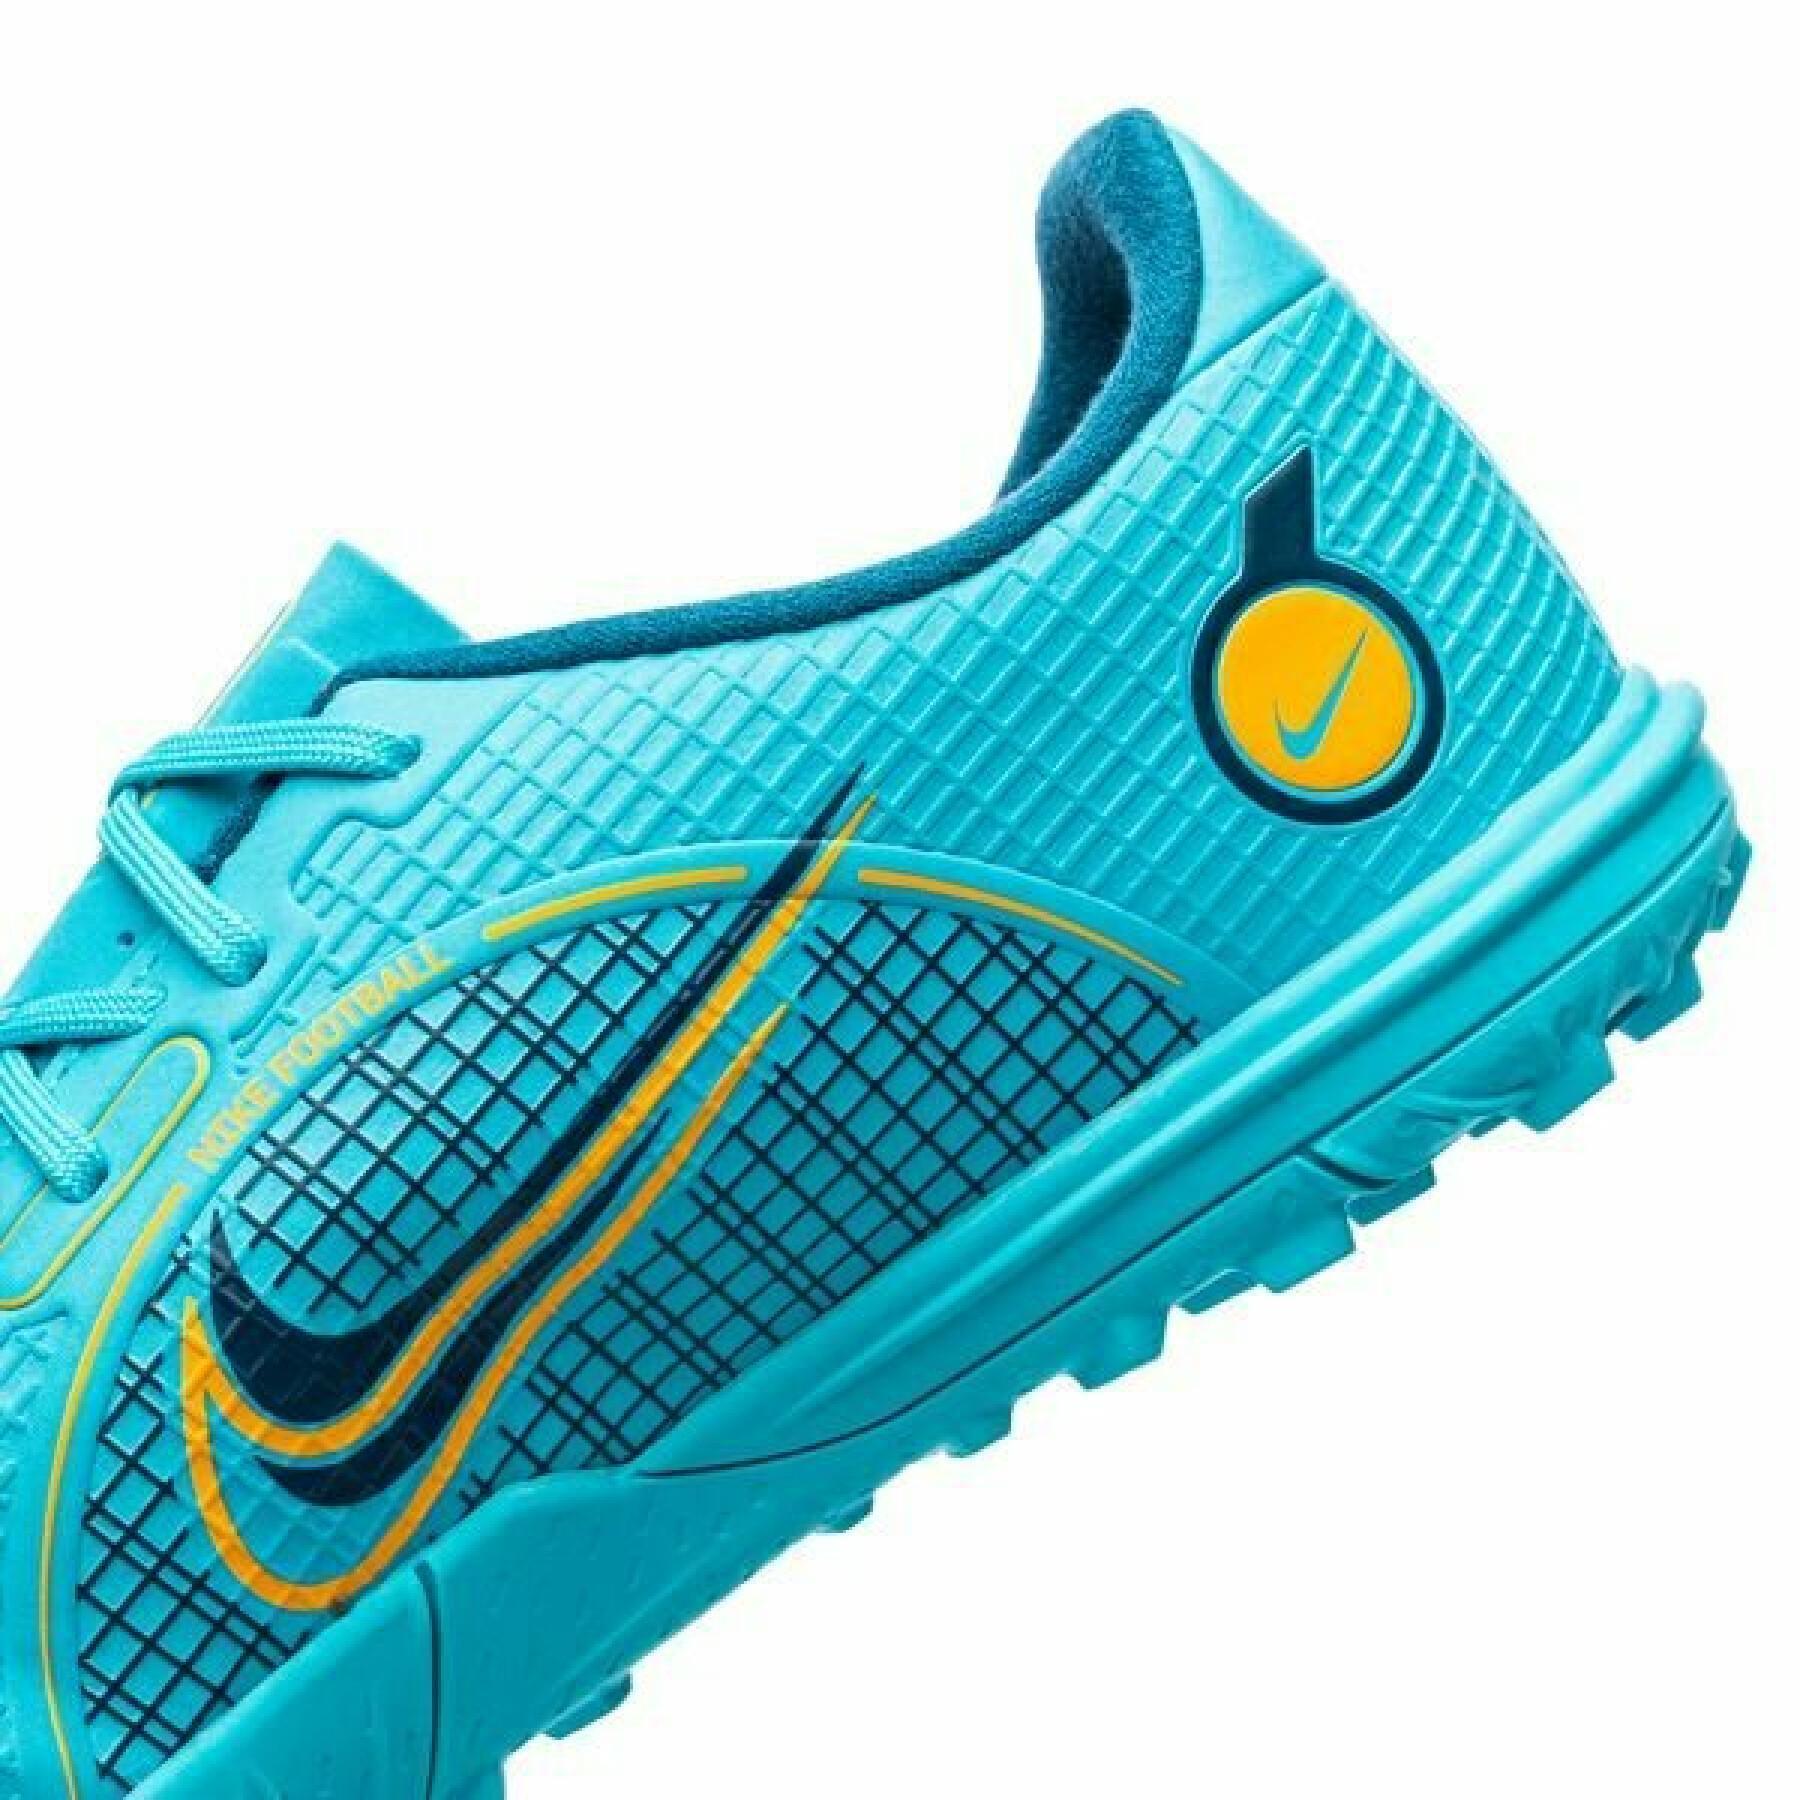 Children's soccer shoes Nike Jr vapor 14 academy TF -Blueprint Pack